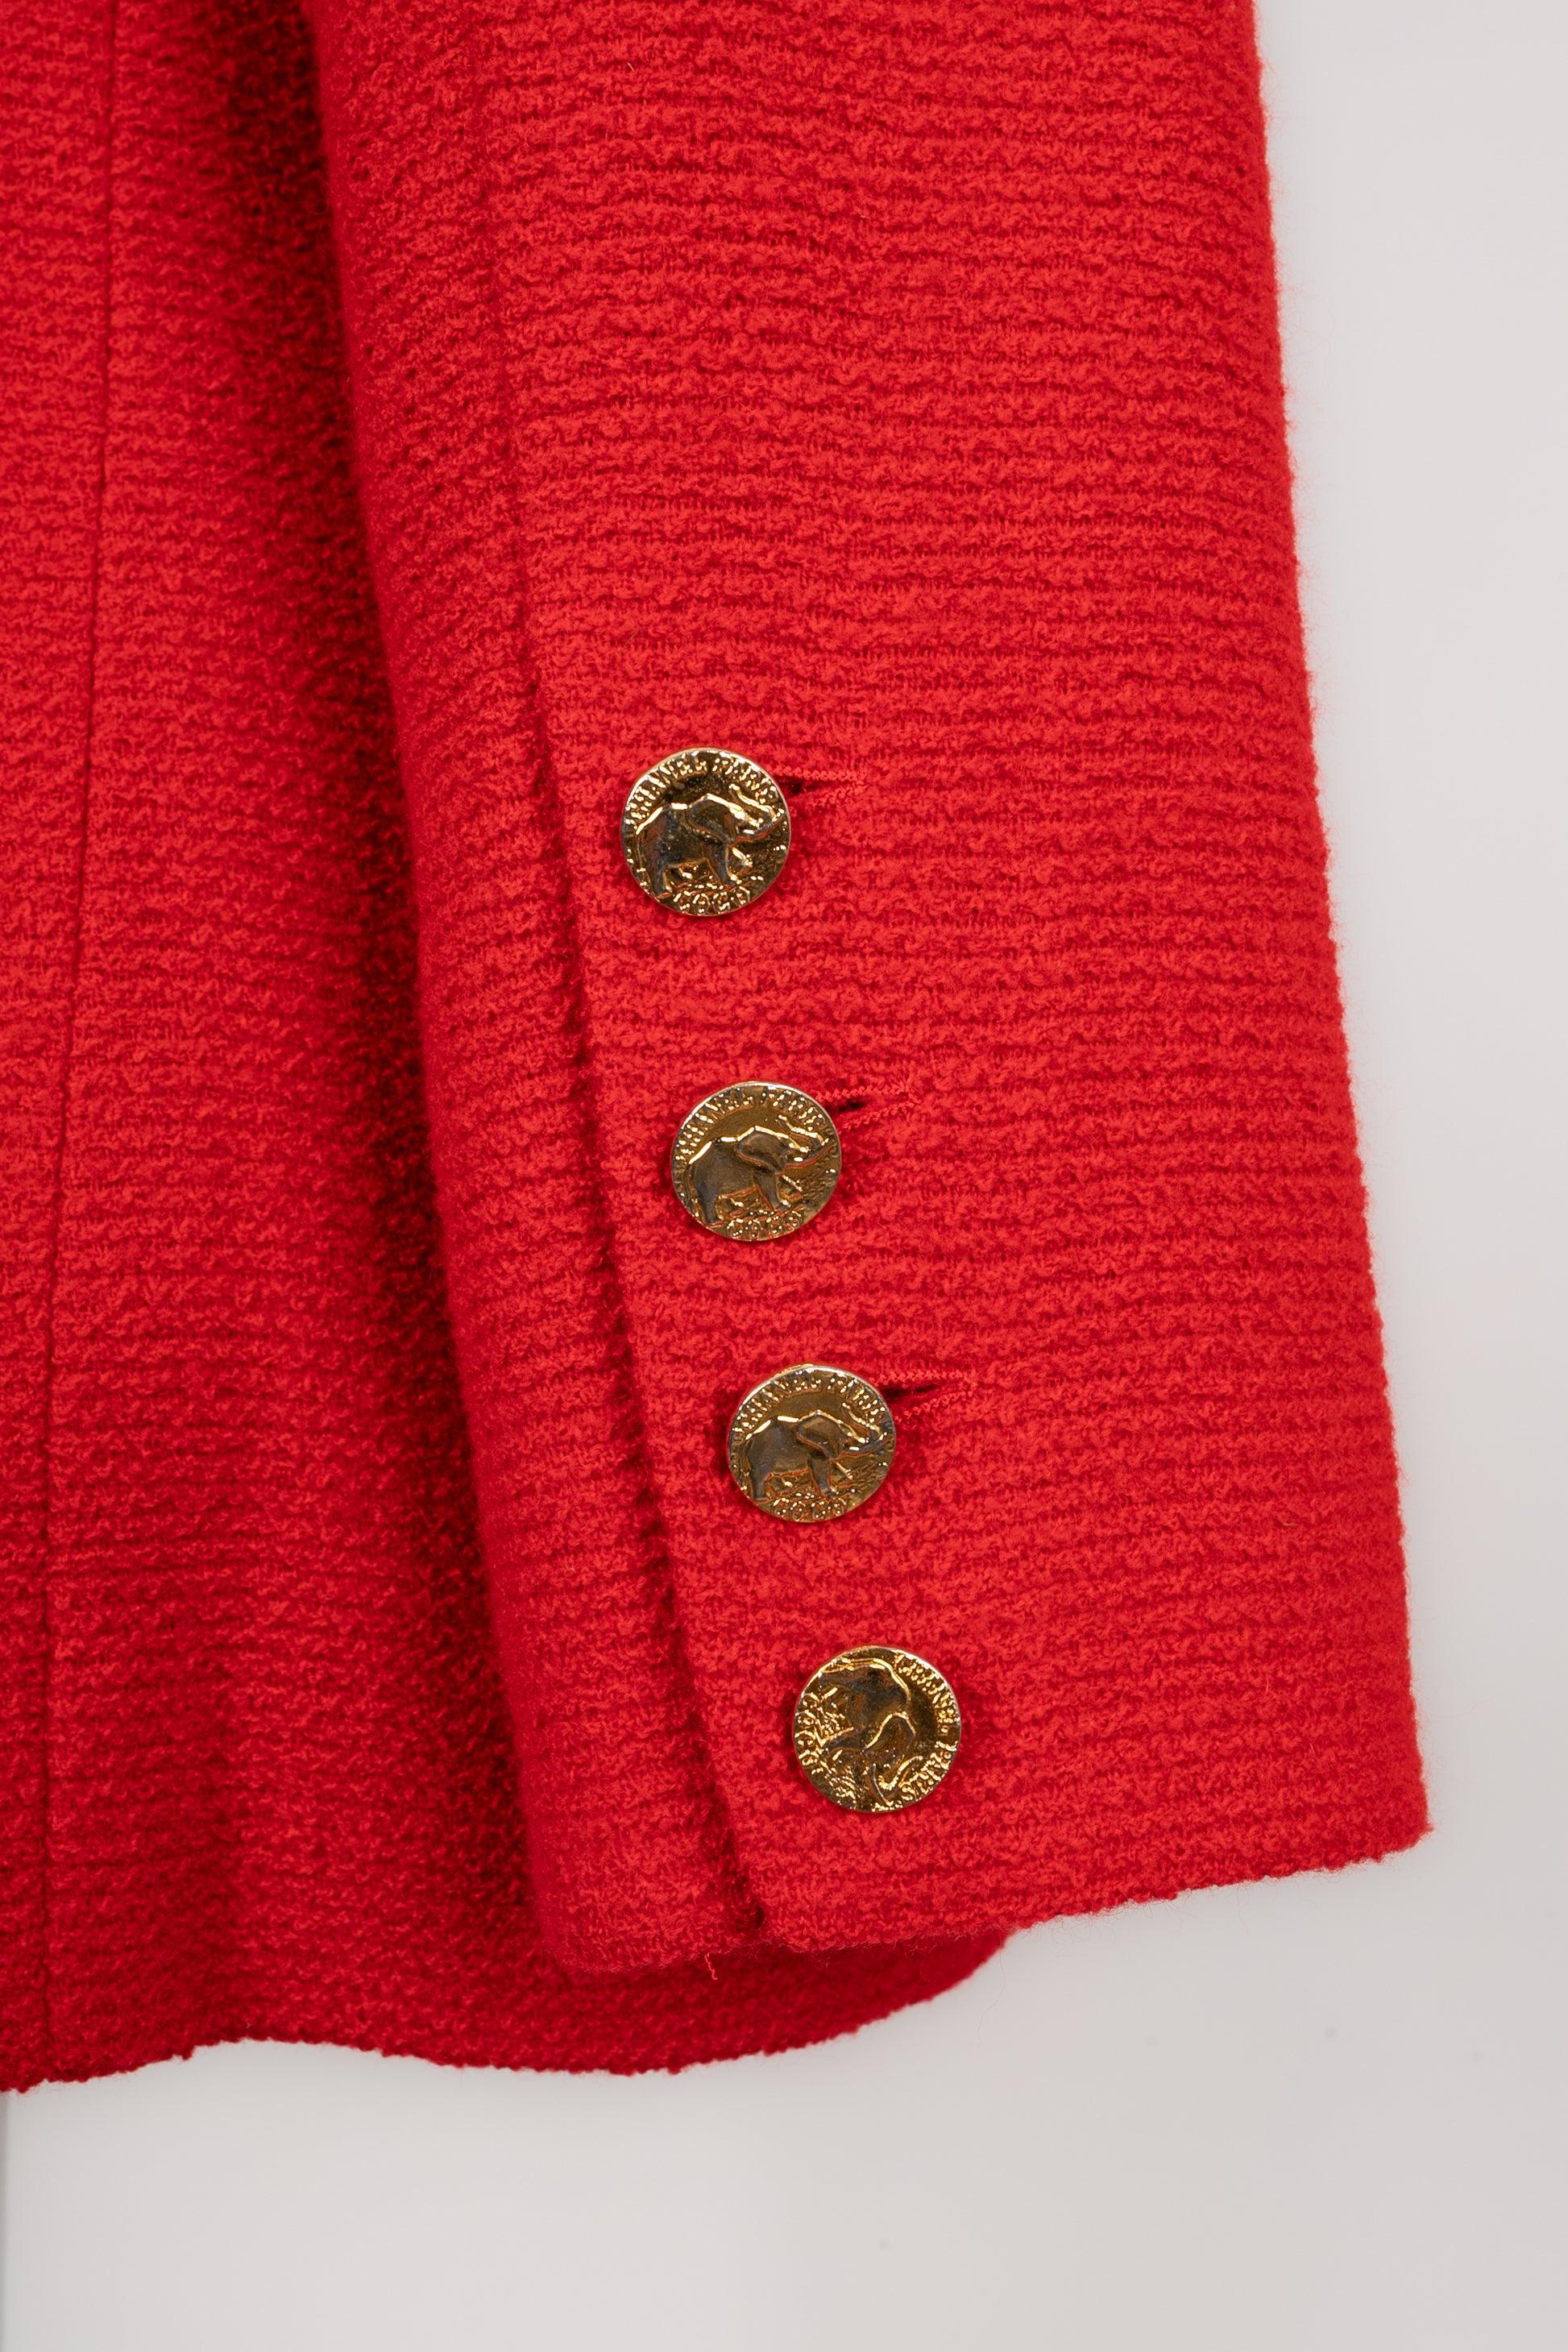 Chanel Red Tweed Jacket 1